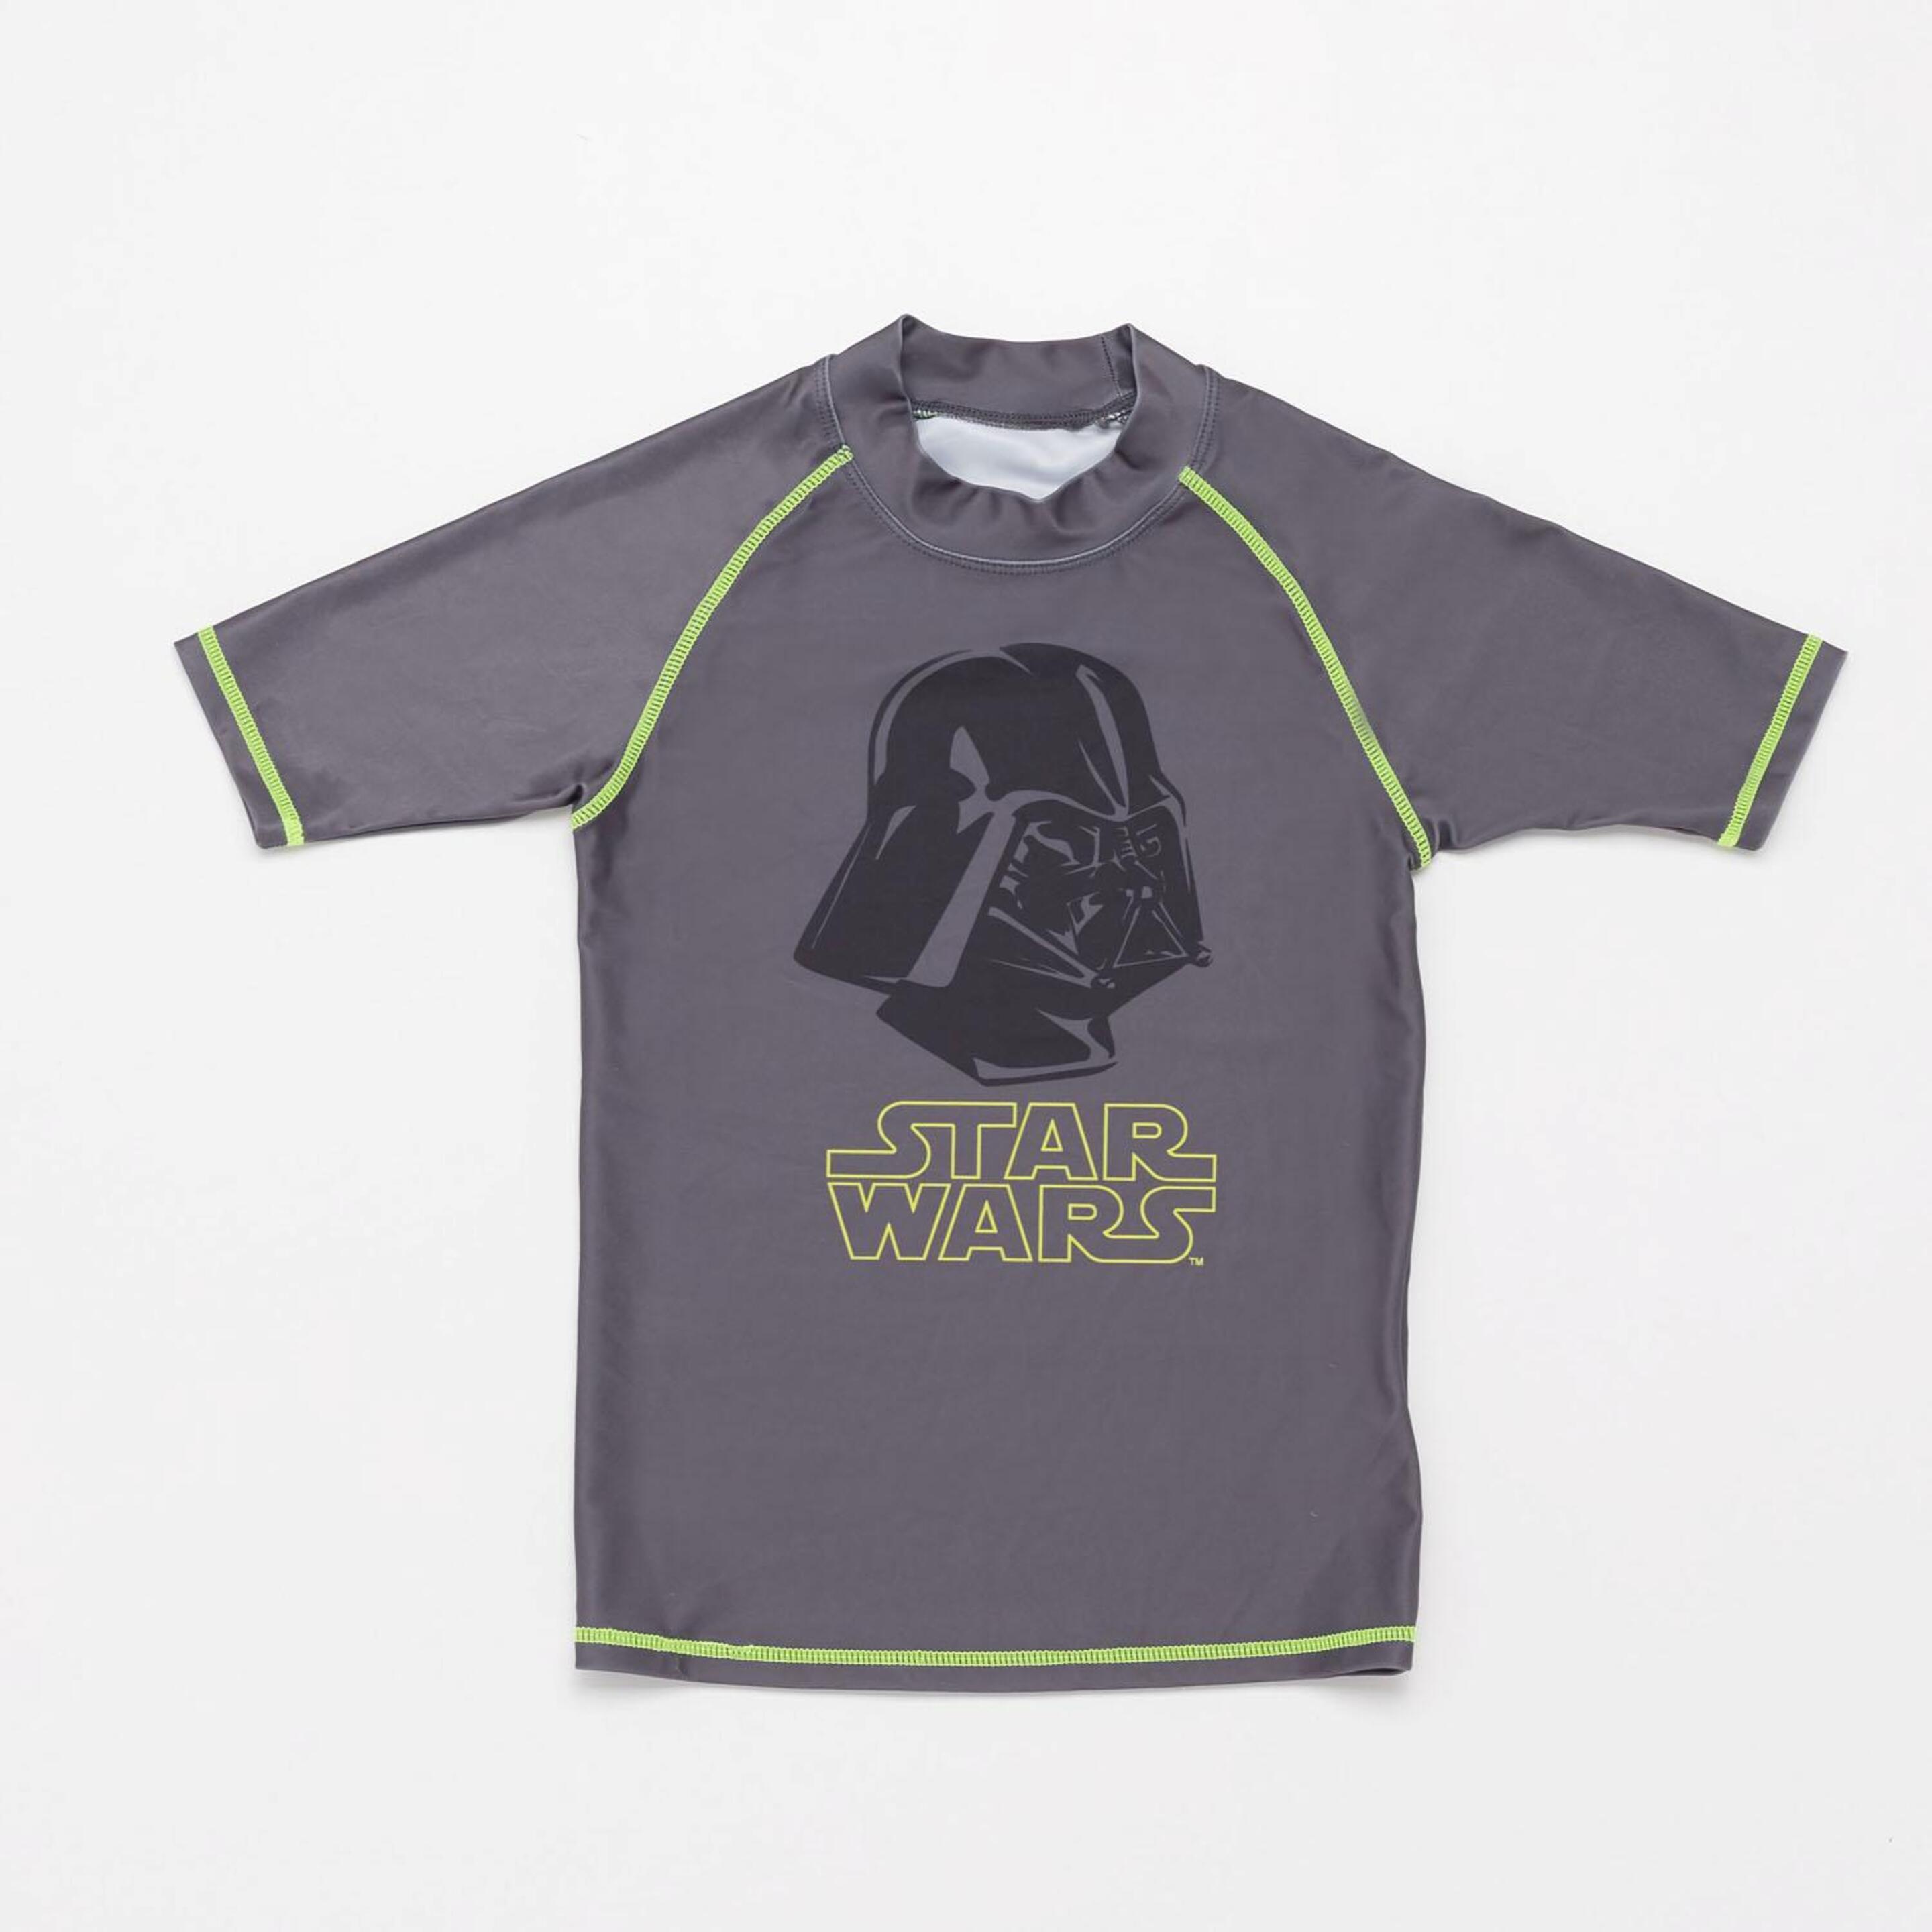 Anh Jr Camiseta Natacion M/c Nylon Star Wars